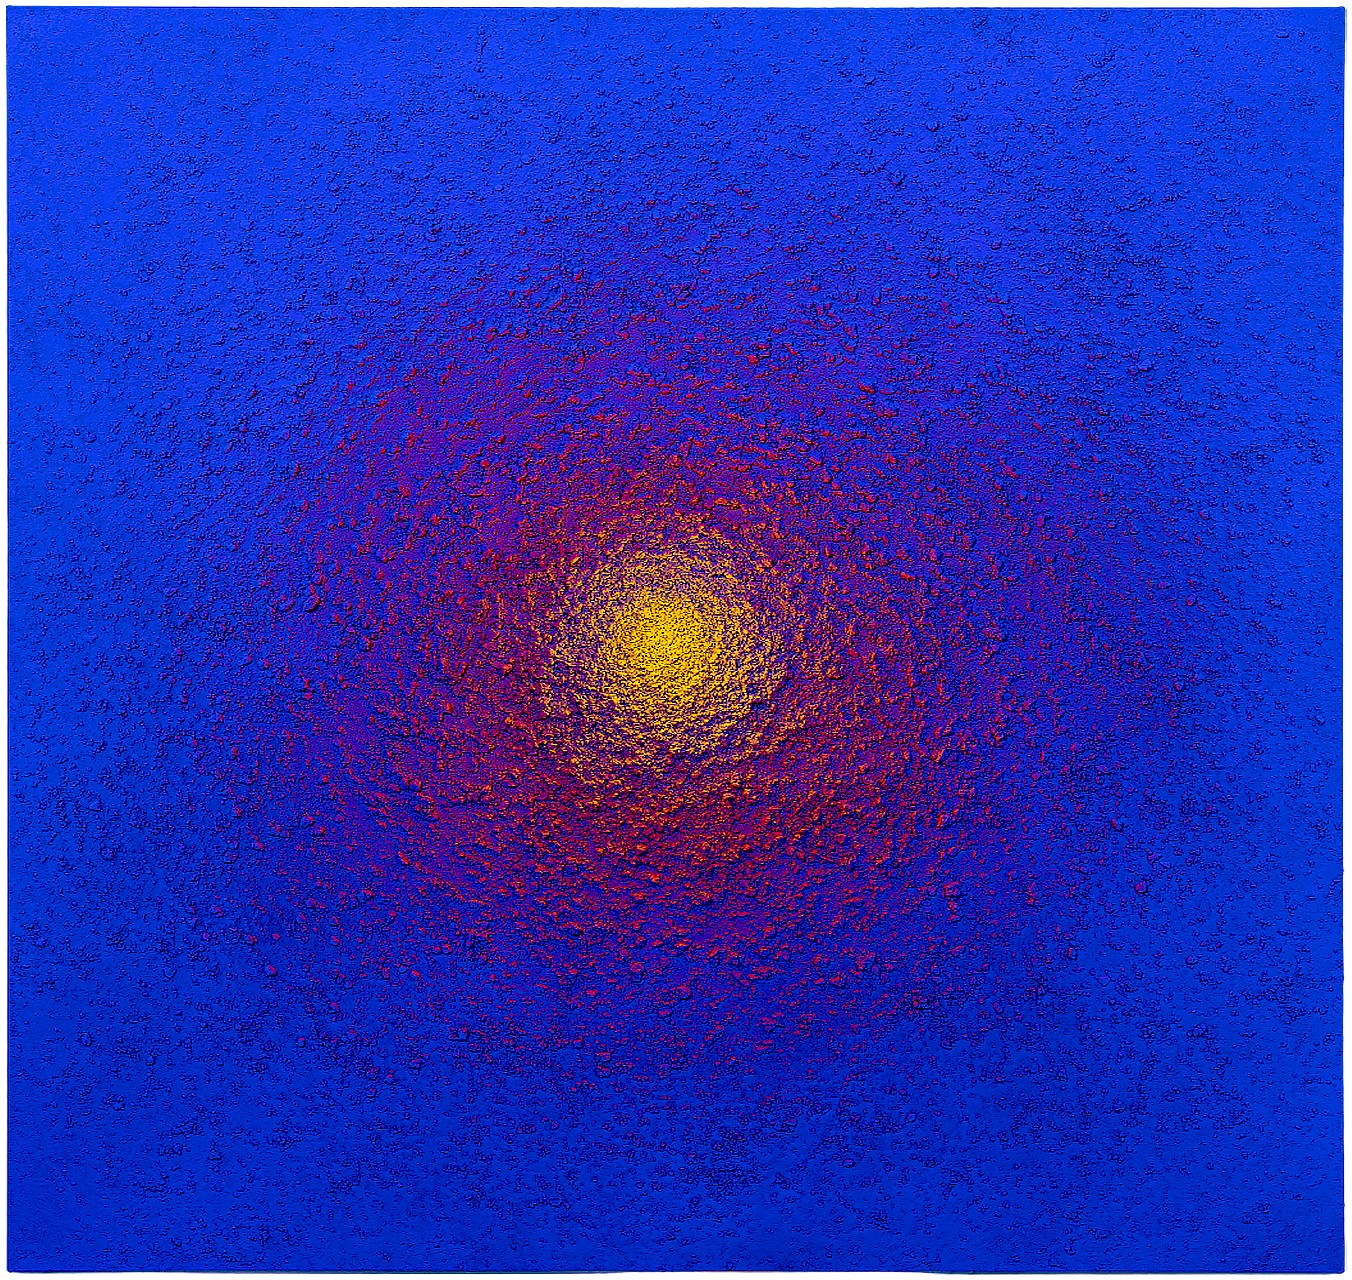 Interstellar Galaxy Red Blue Yellow 18.61 - SAMUEL DEJONG - Galeries Bartoux